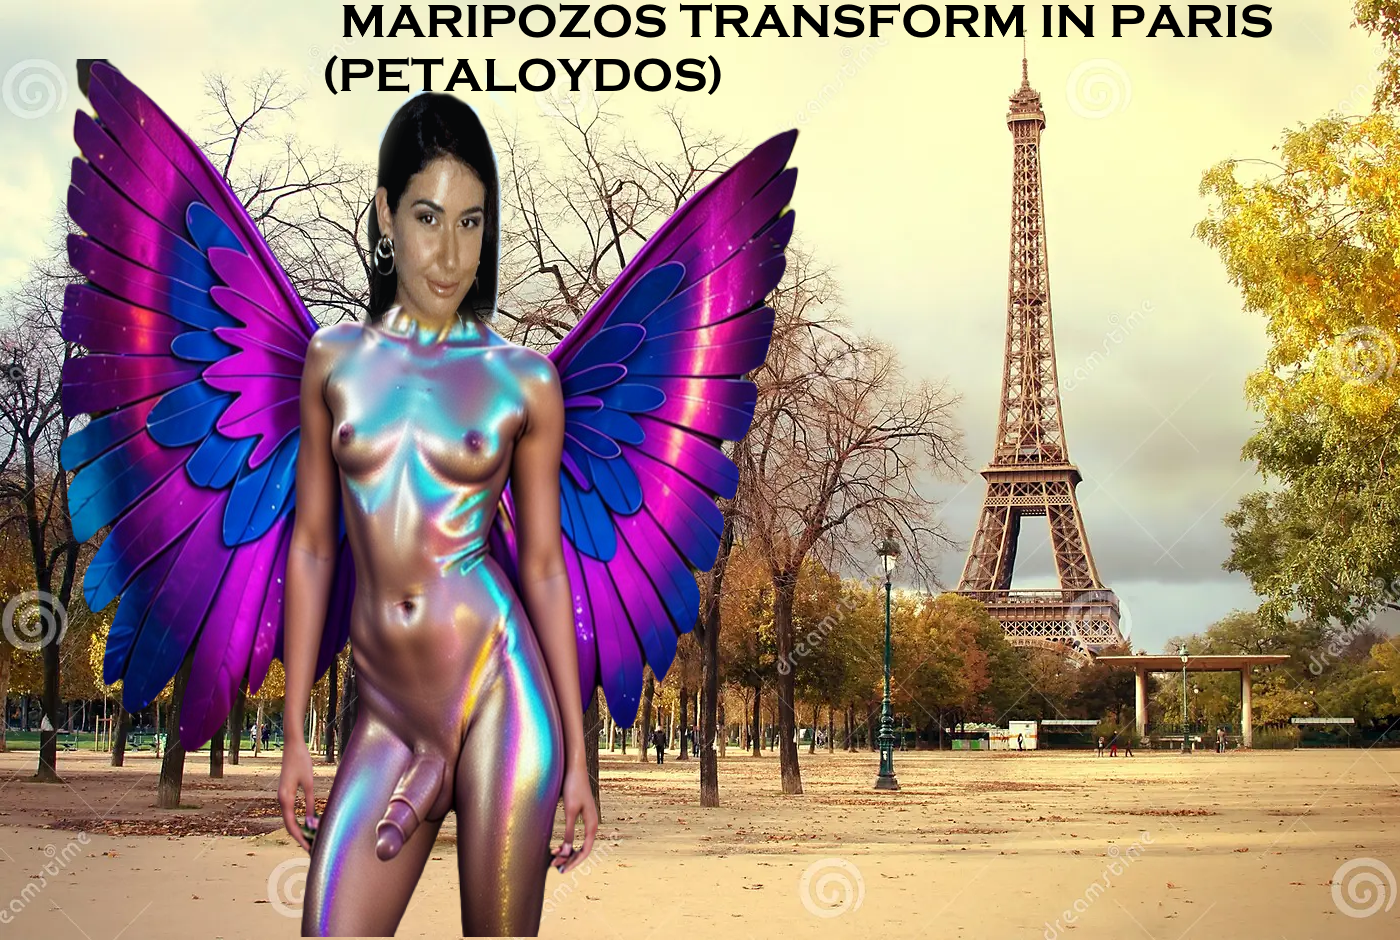 MARIPOZOS IN PARIS.png